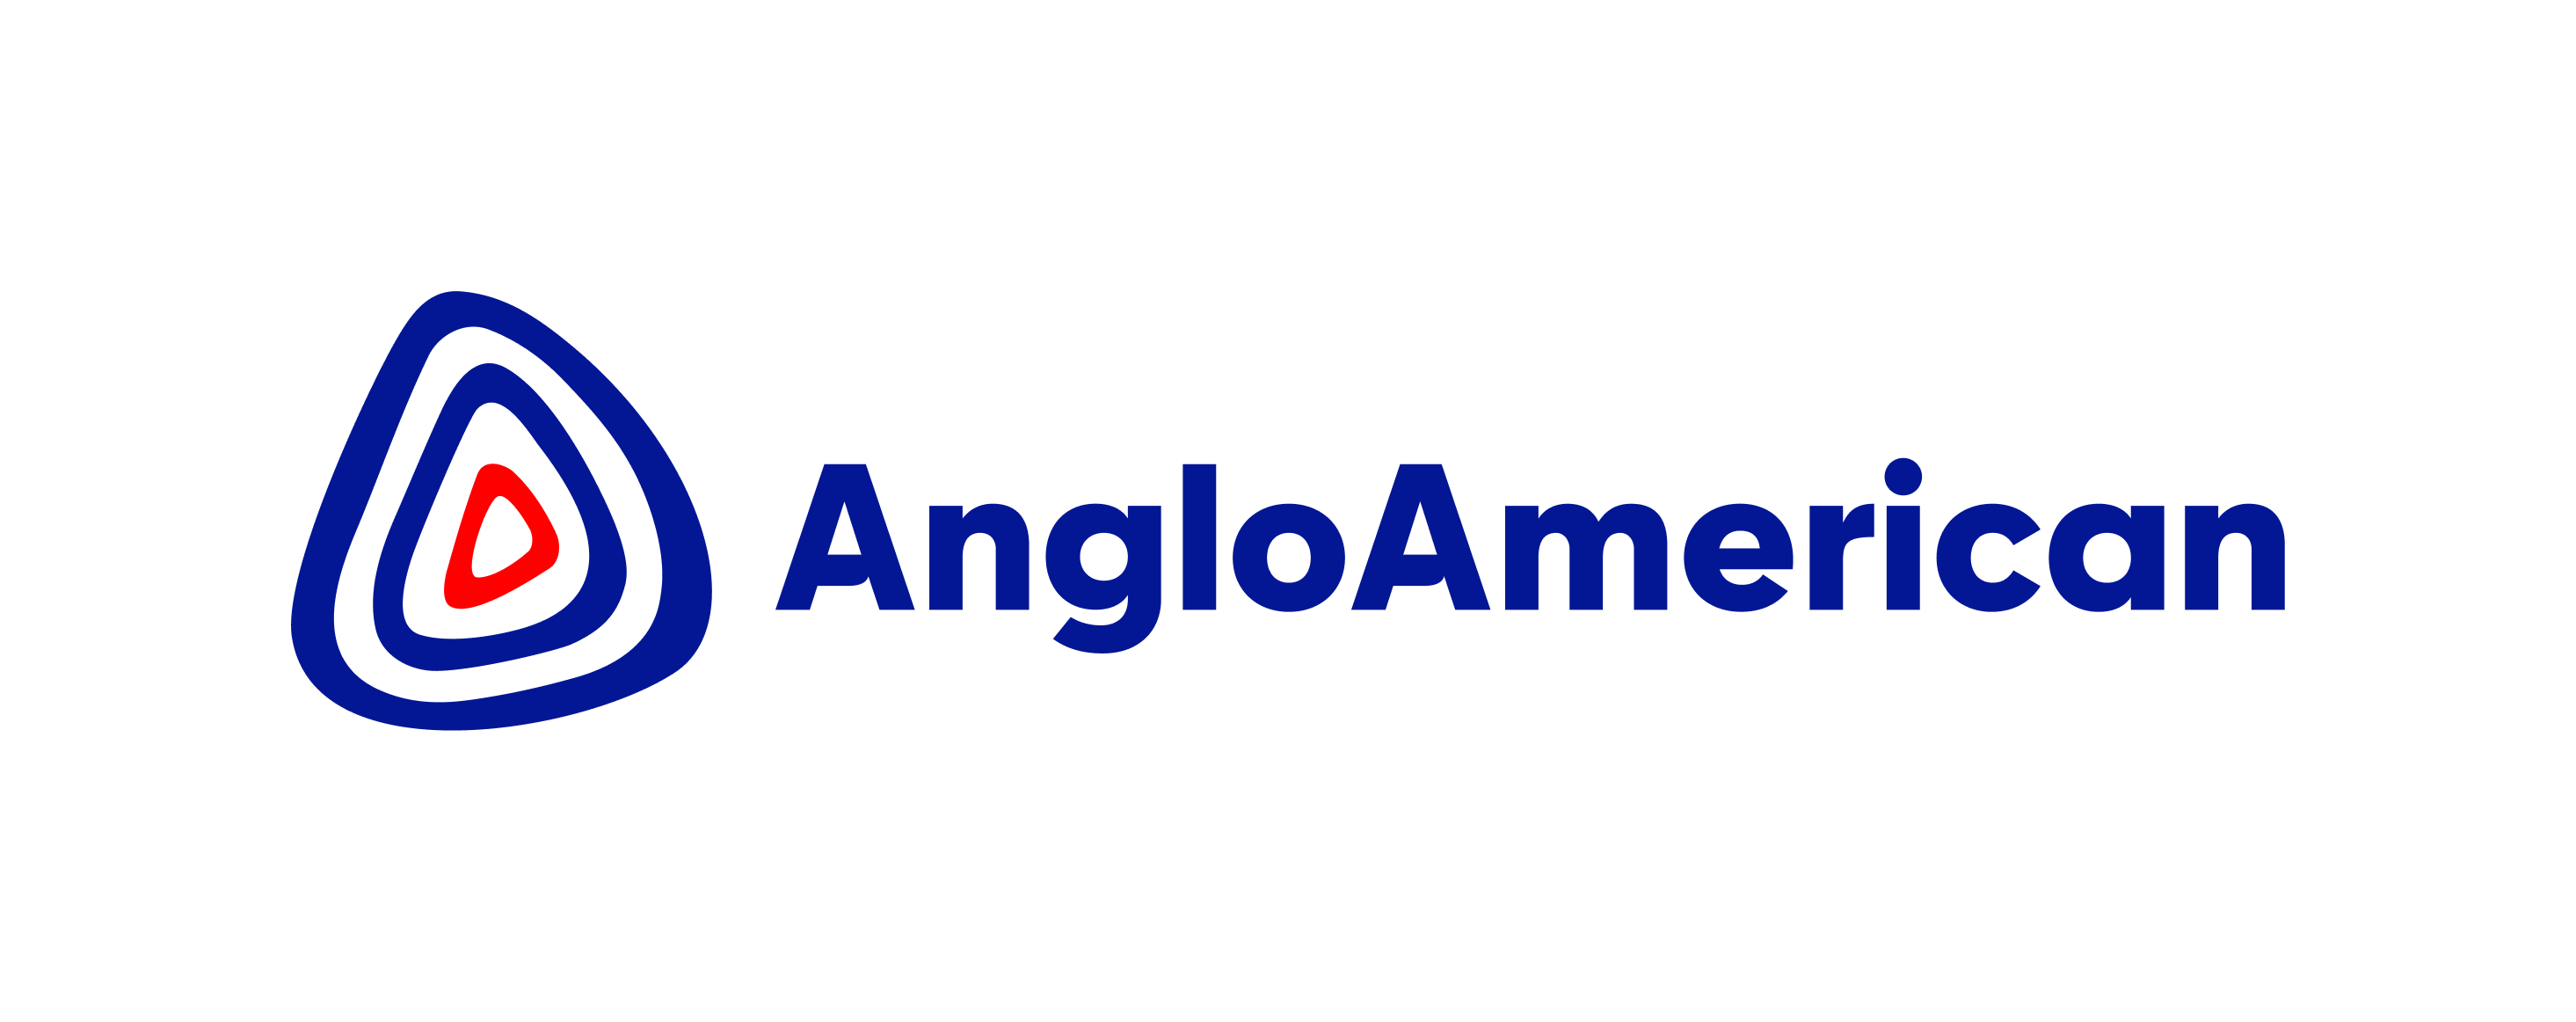 Anglo_American_Logo_RGB_4C